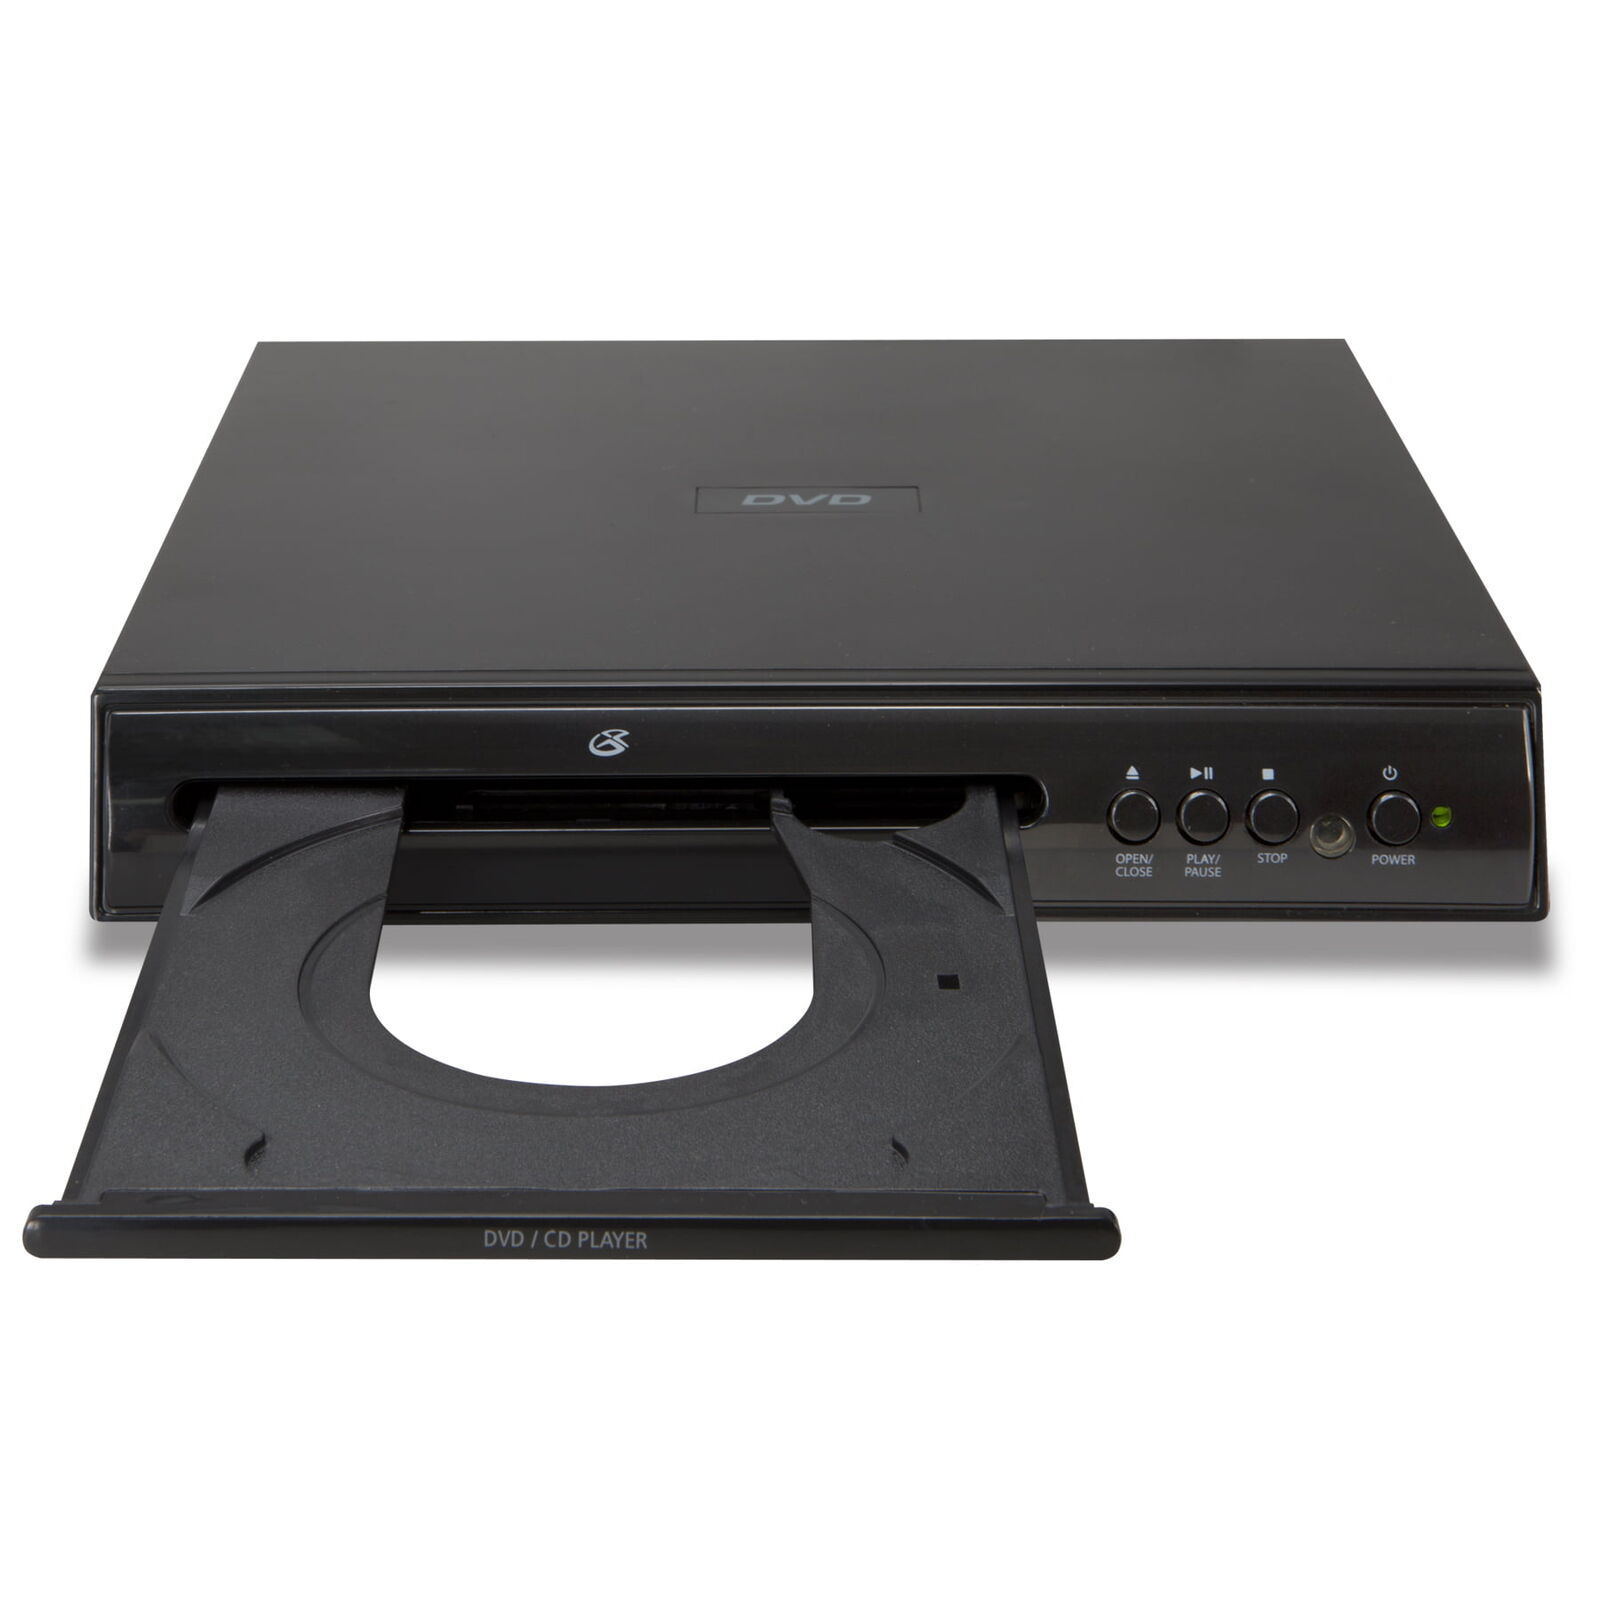 New GPX D200B Progressive Scan DVD Player with Remote, Black GPX RY5791 D200B - фотография #4